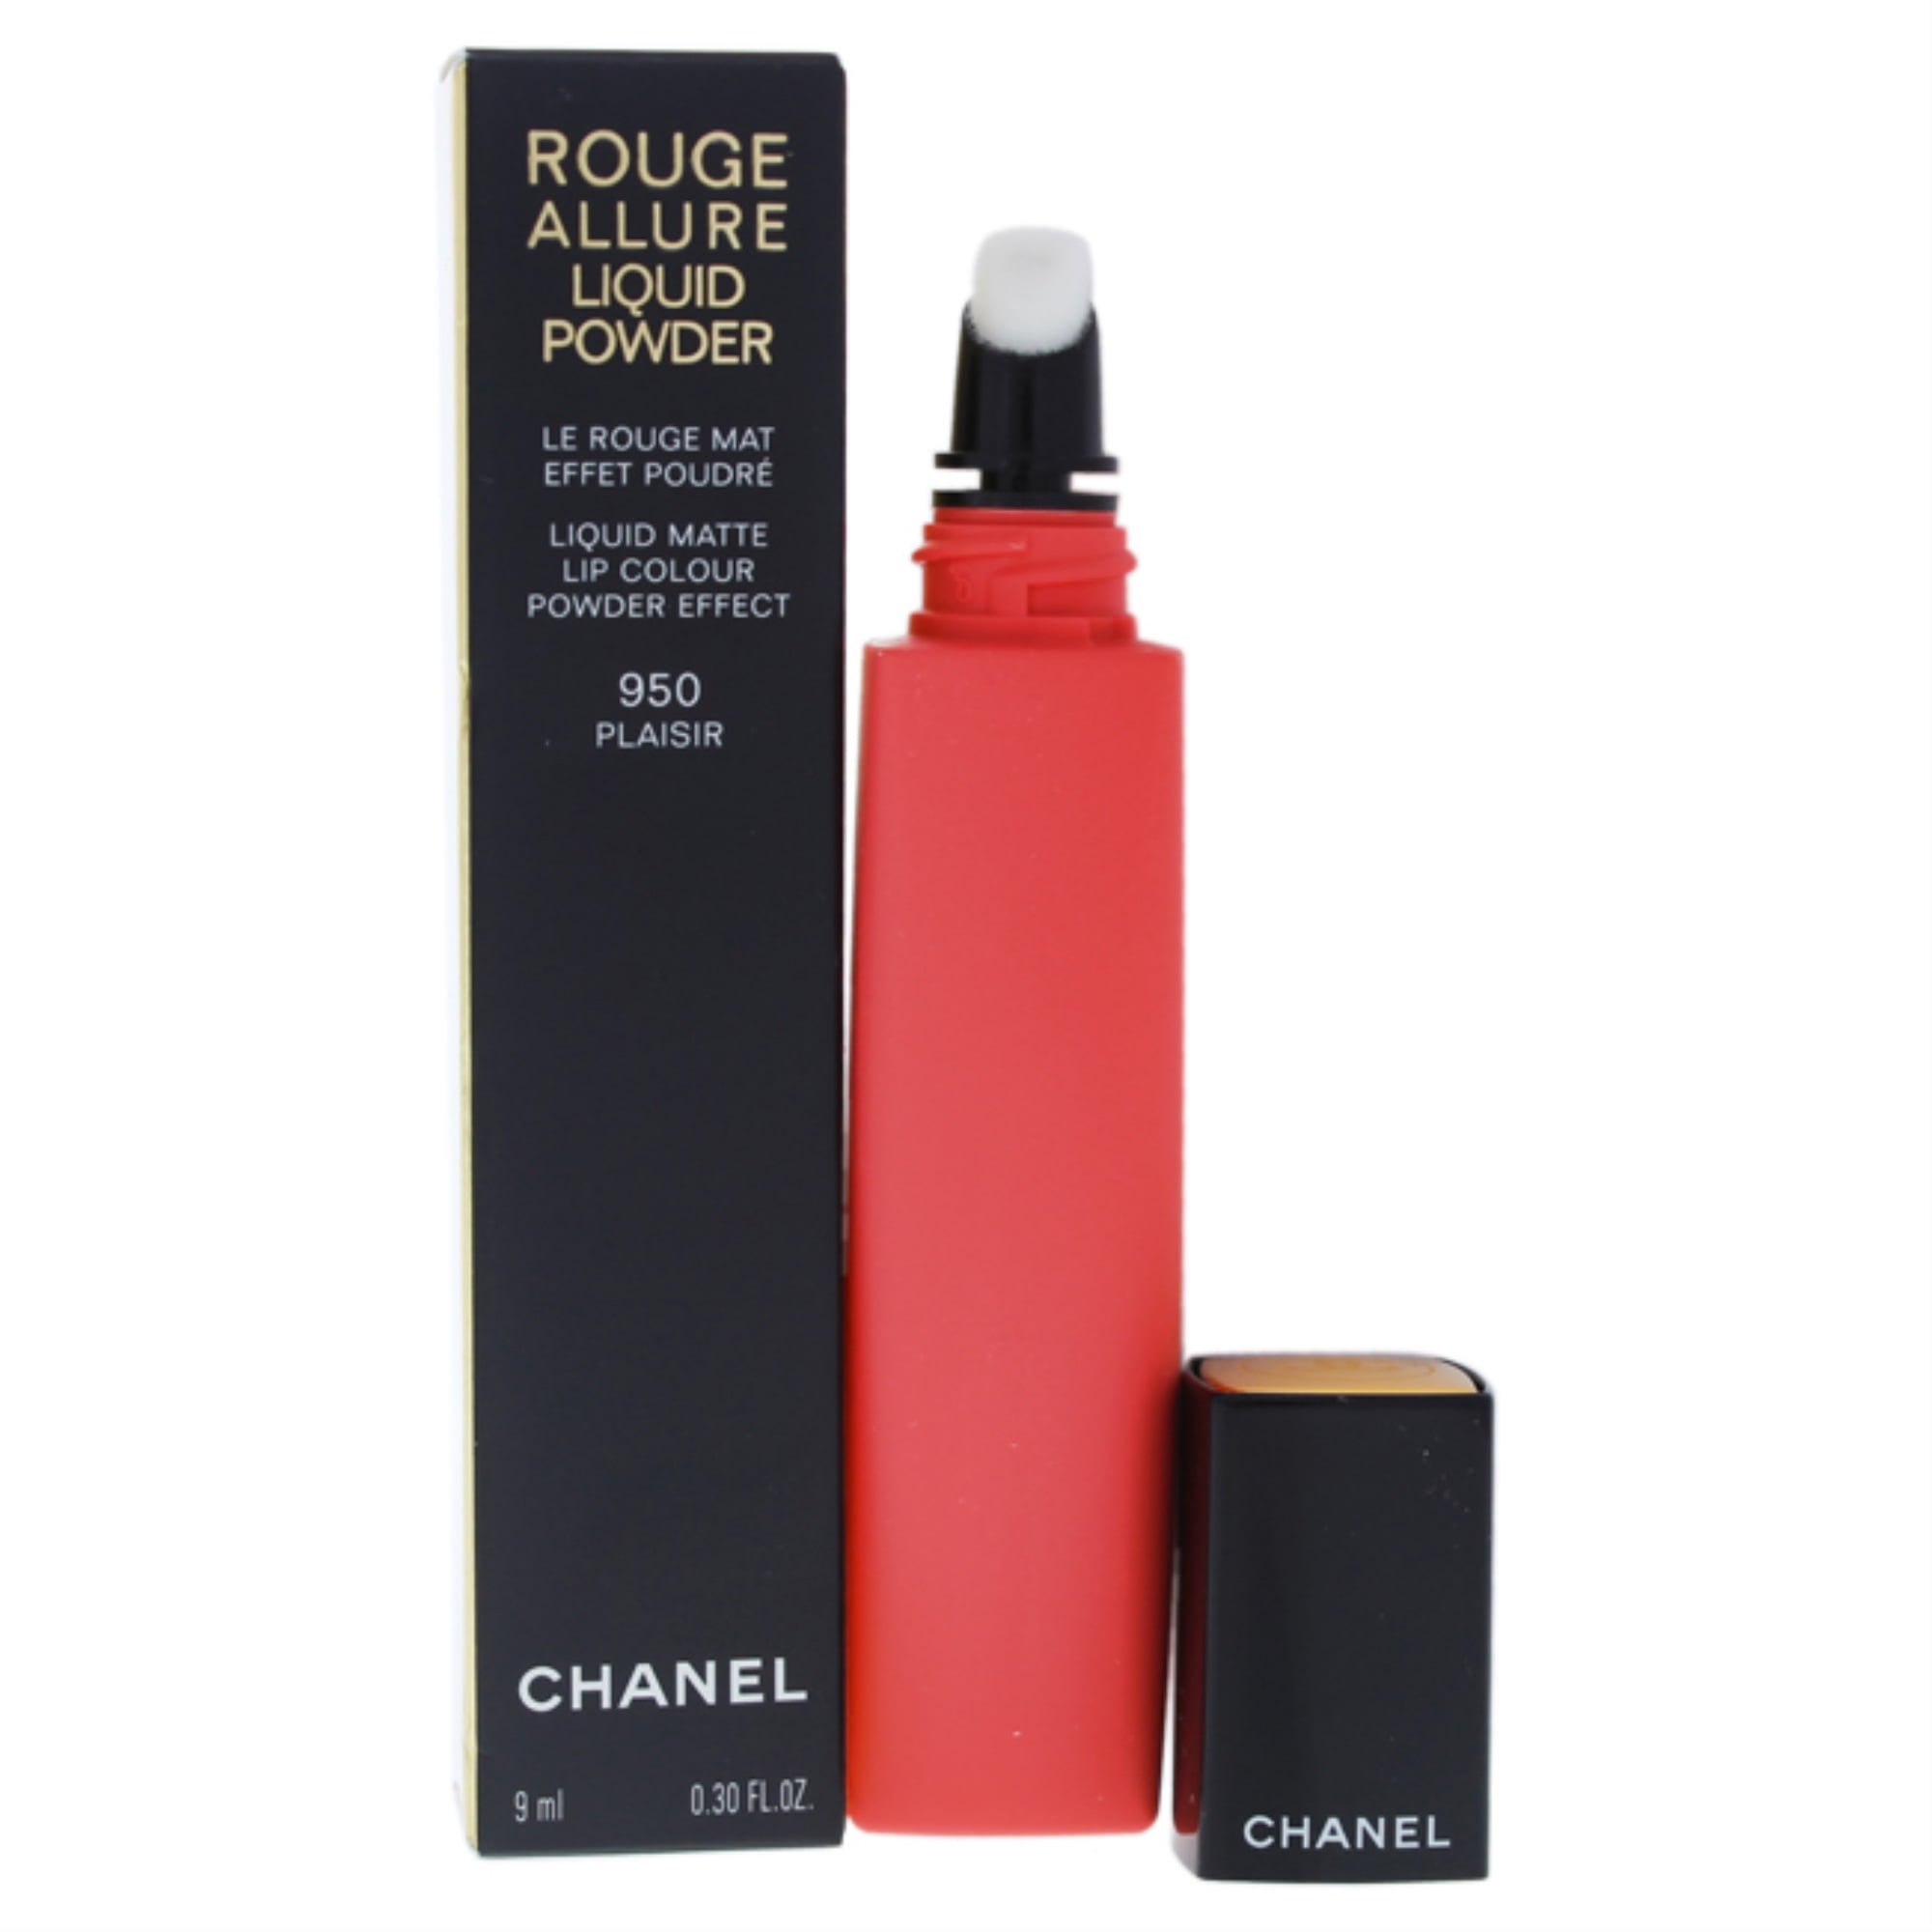 Rouge Allure Liquid Powder - 950 Plaisir by Chanel for Women - oz Lipstick Walmart.com